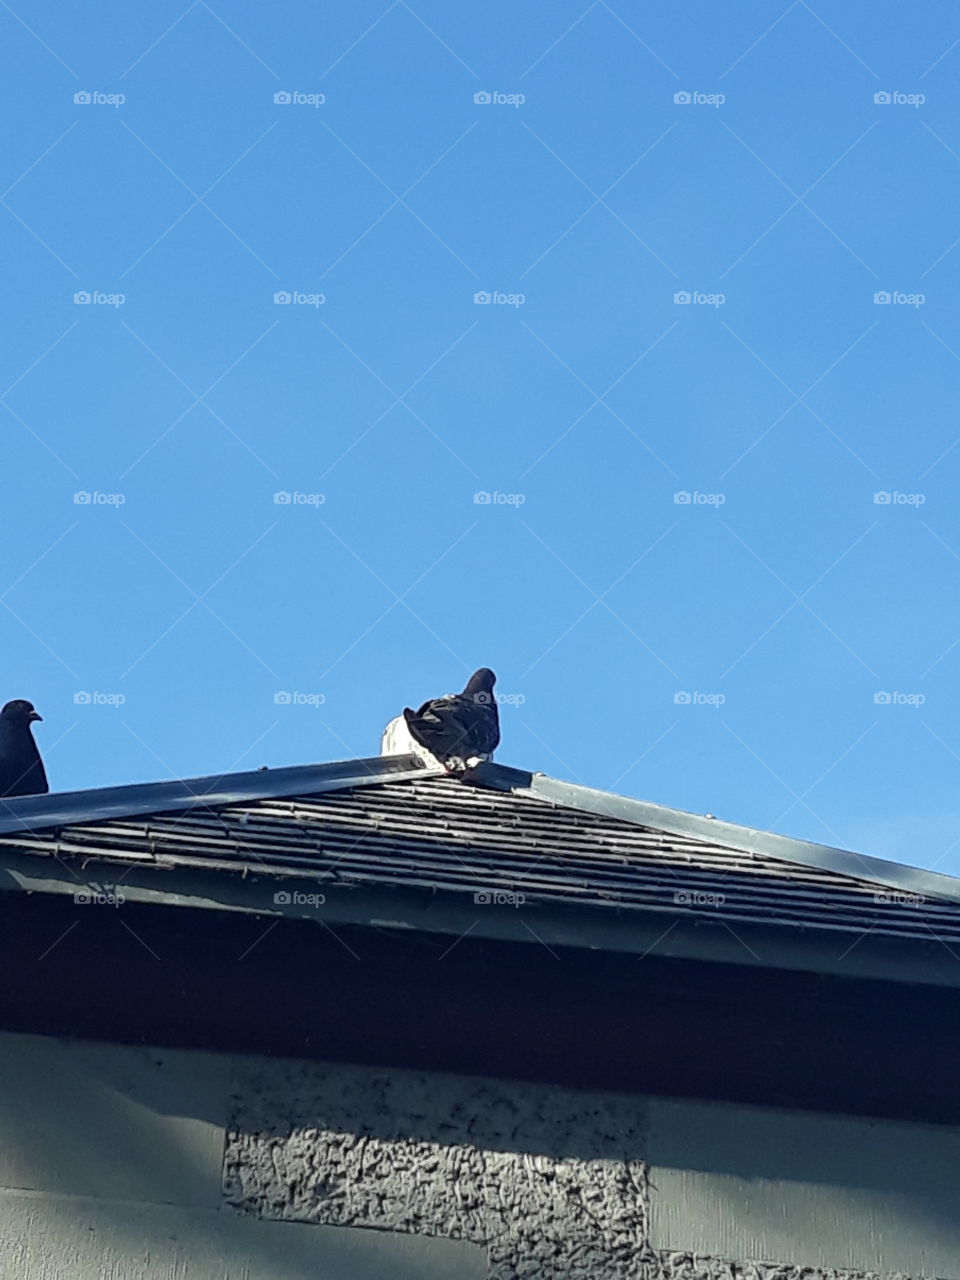 wonderful photo  a bird on a roof